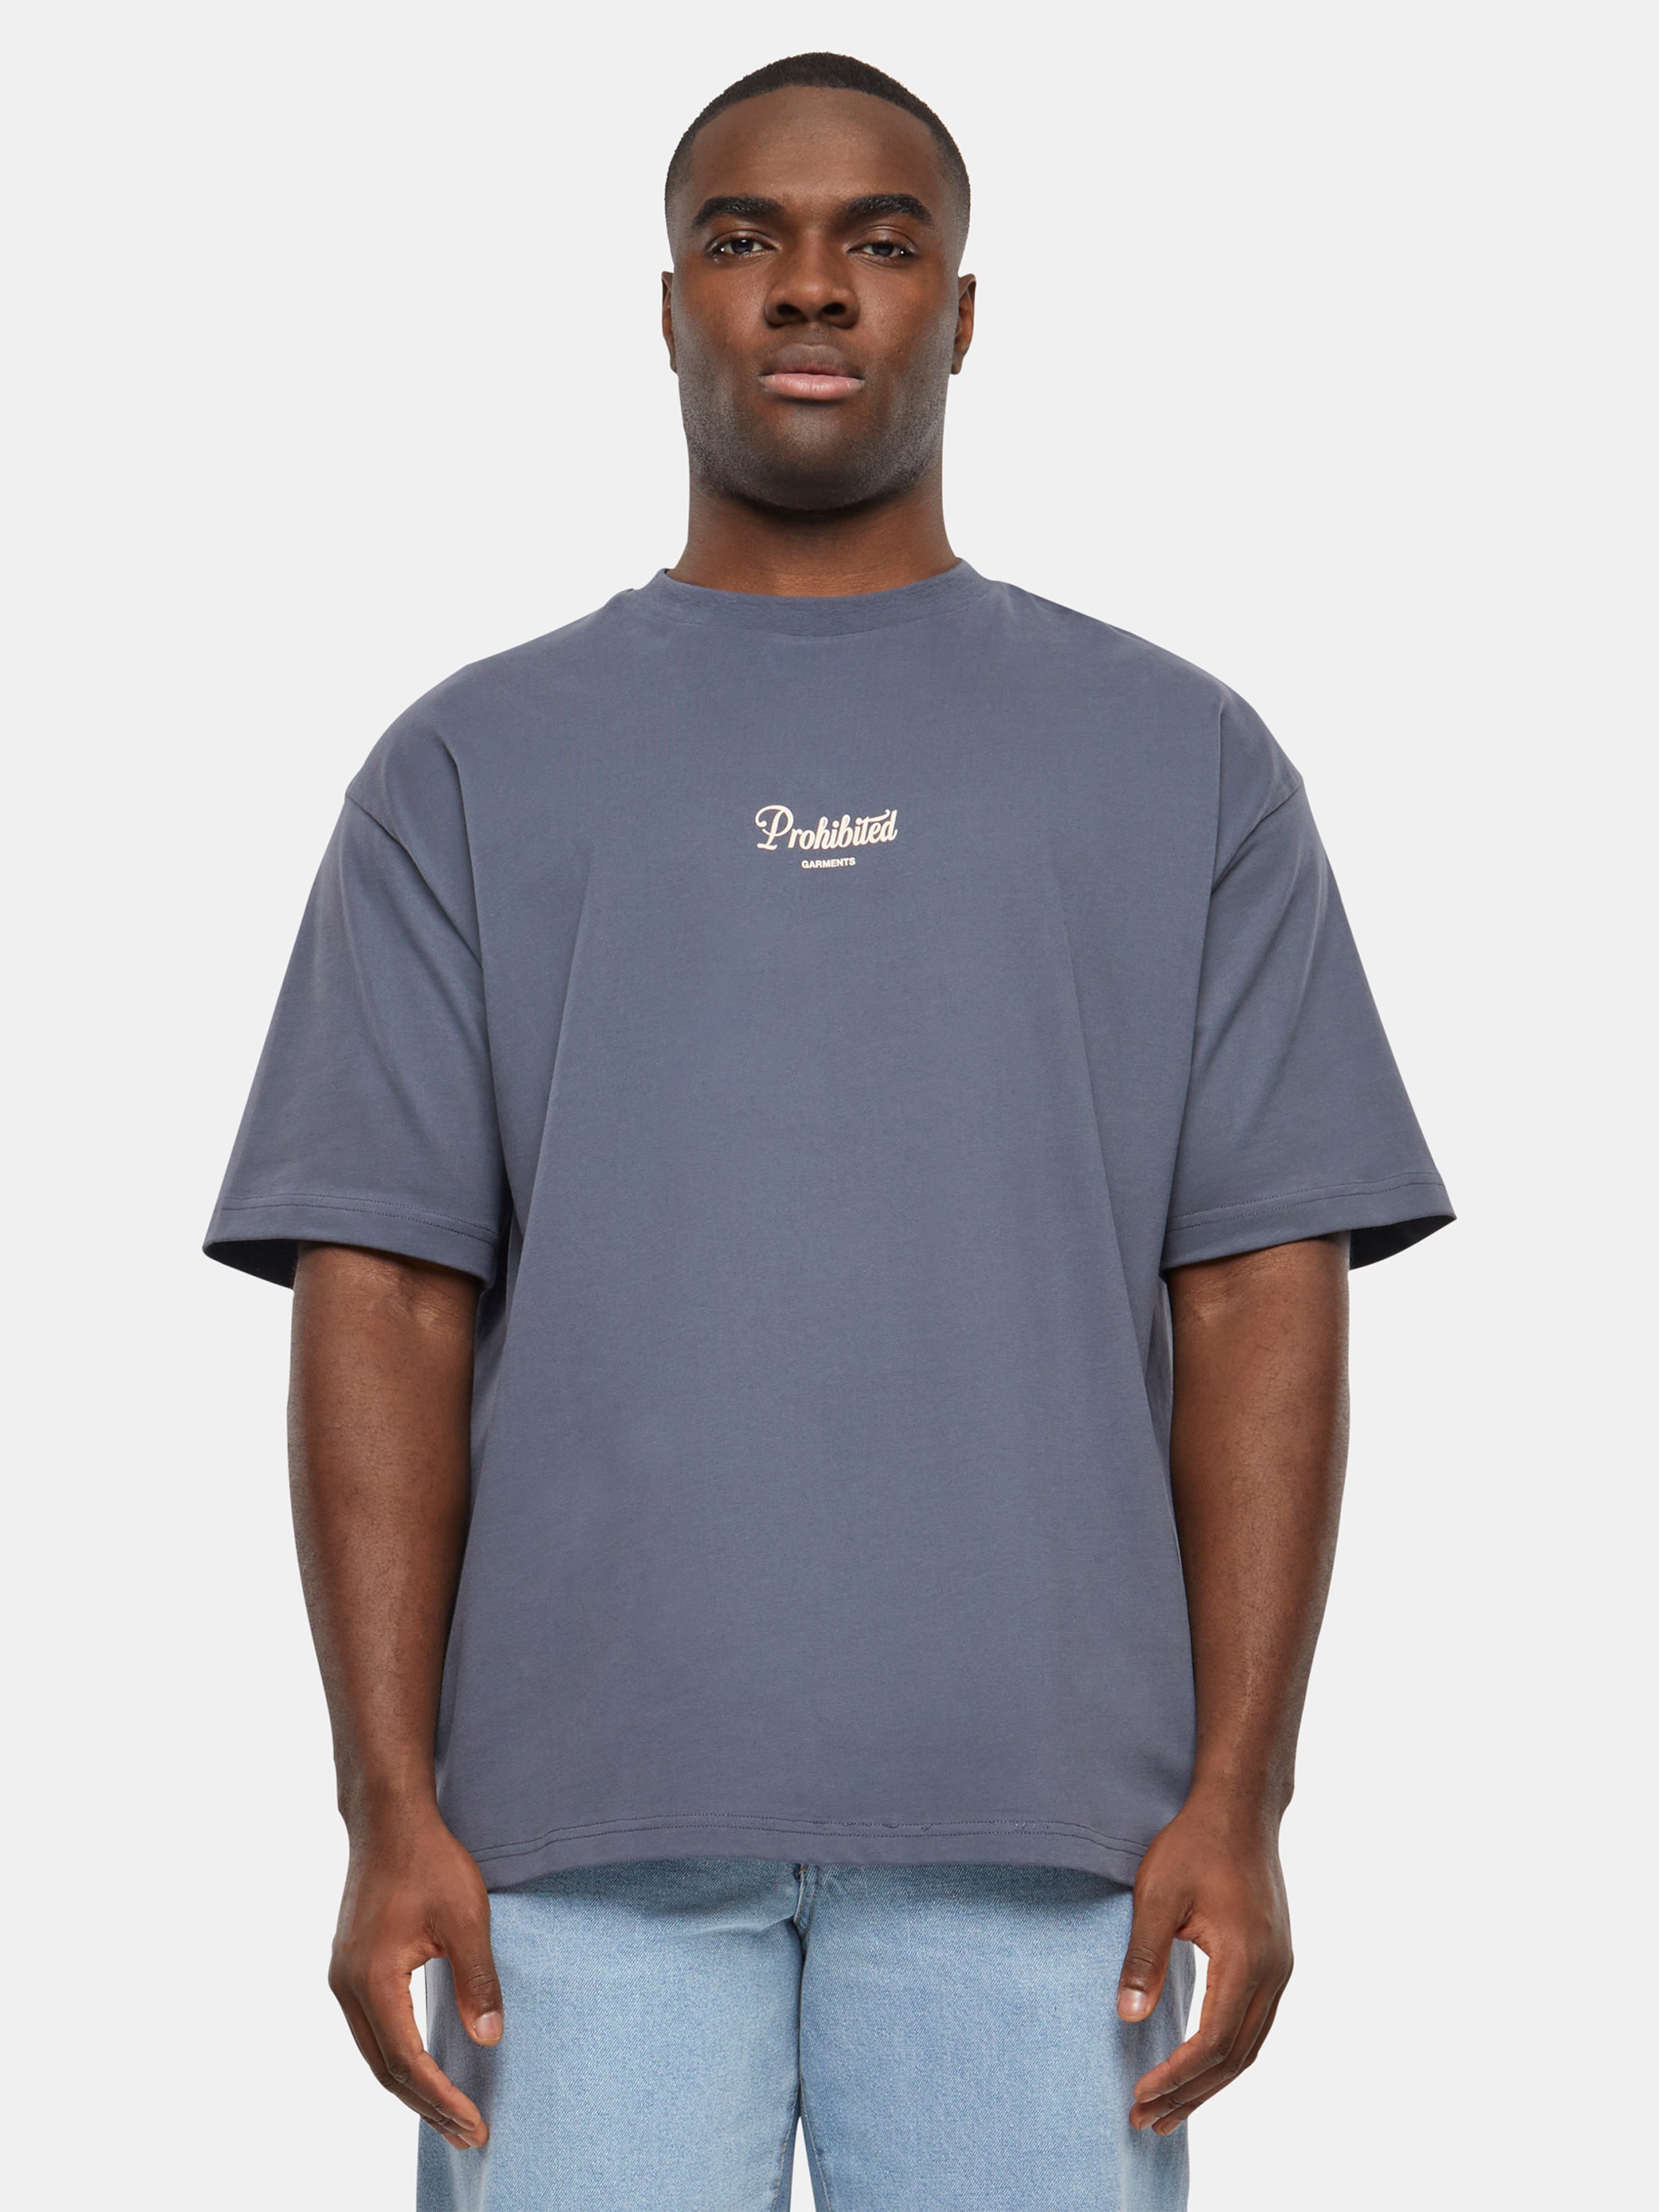 Prohibited PB Garment T Shirts Männer,Unisex op kleur grijs, Maat L